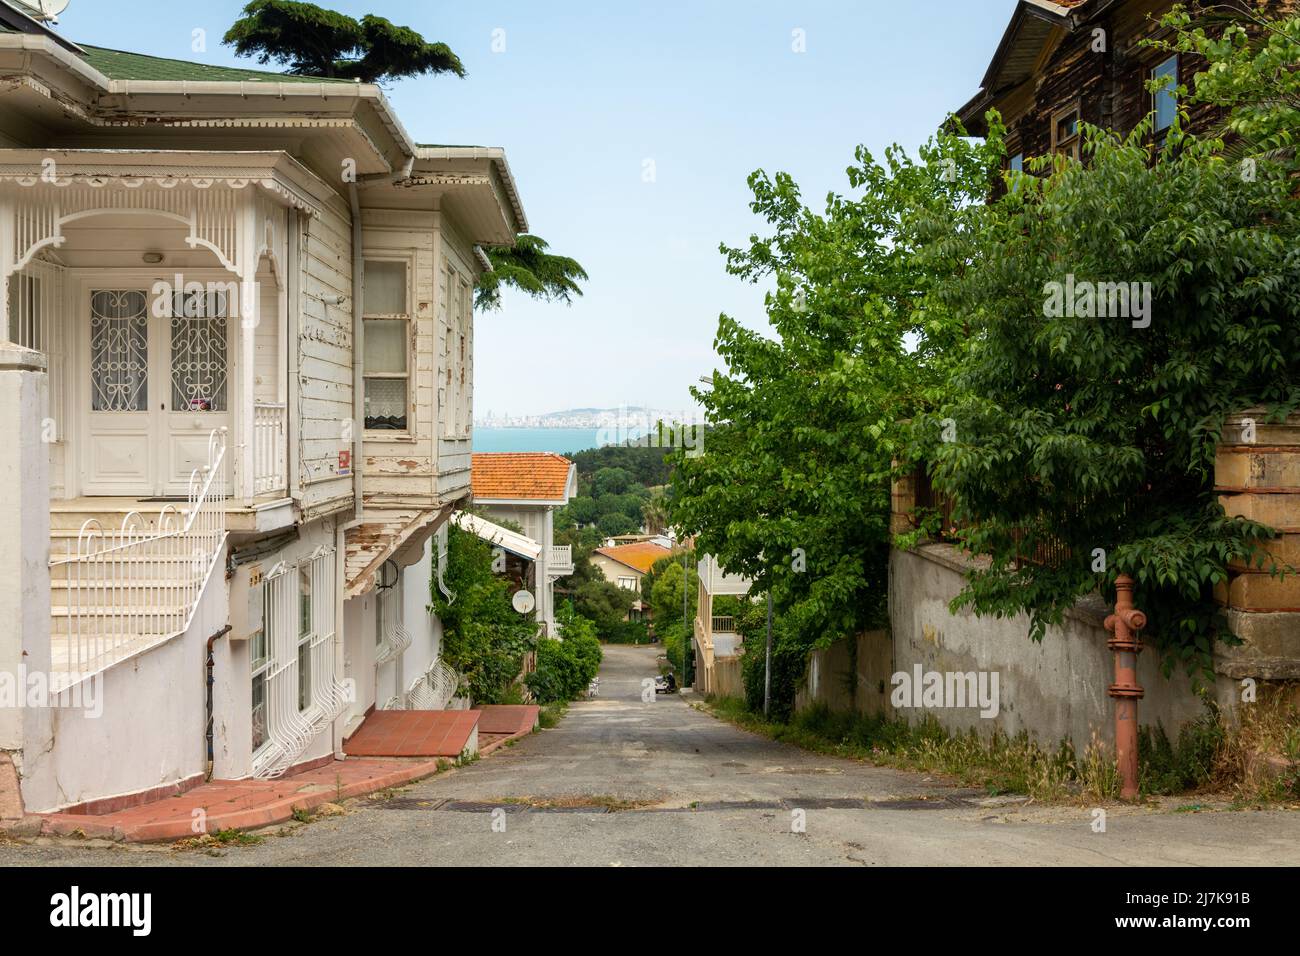 Local street and houses on the island of Heybeliada near Istanbul in Turkey. Stock Photo